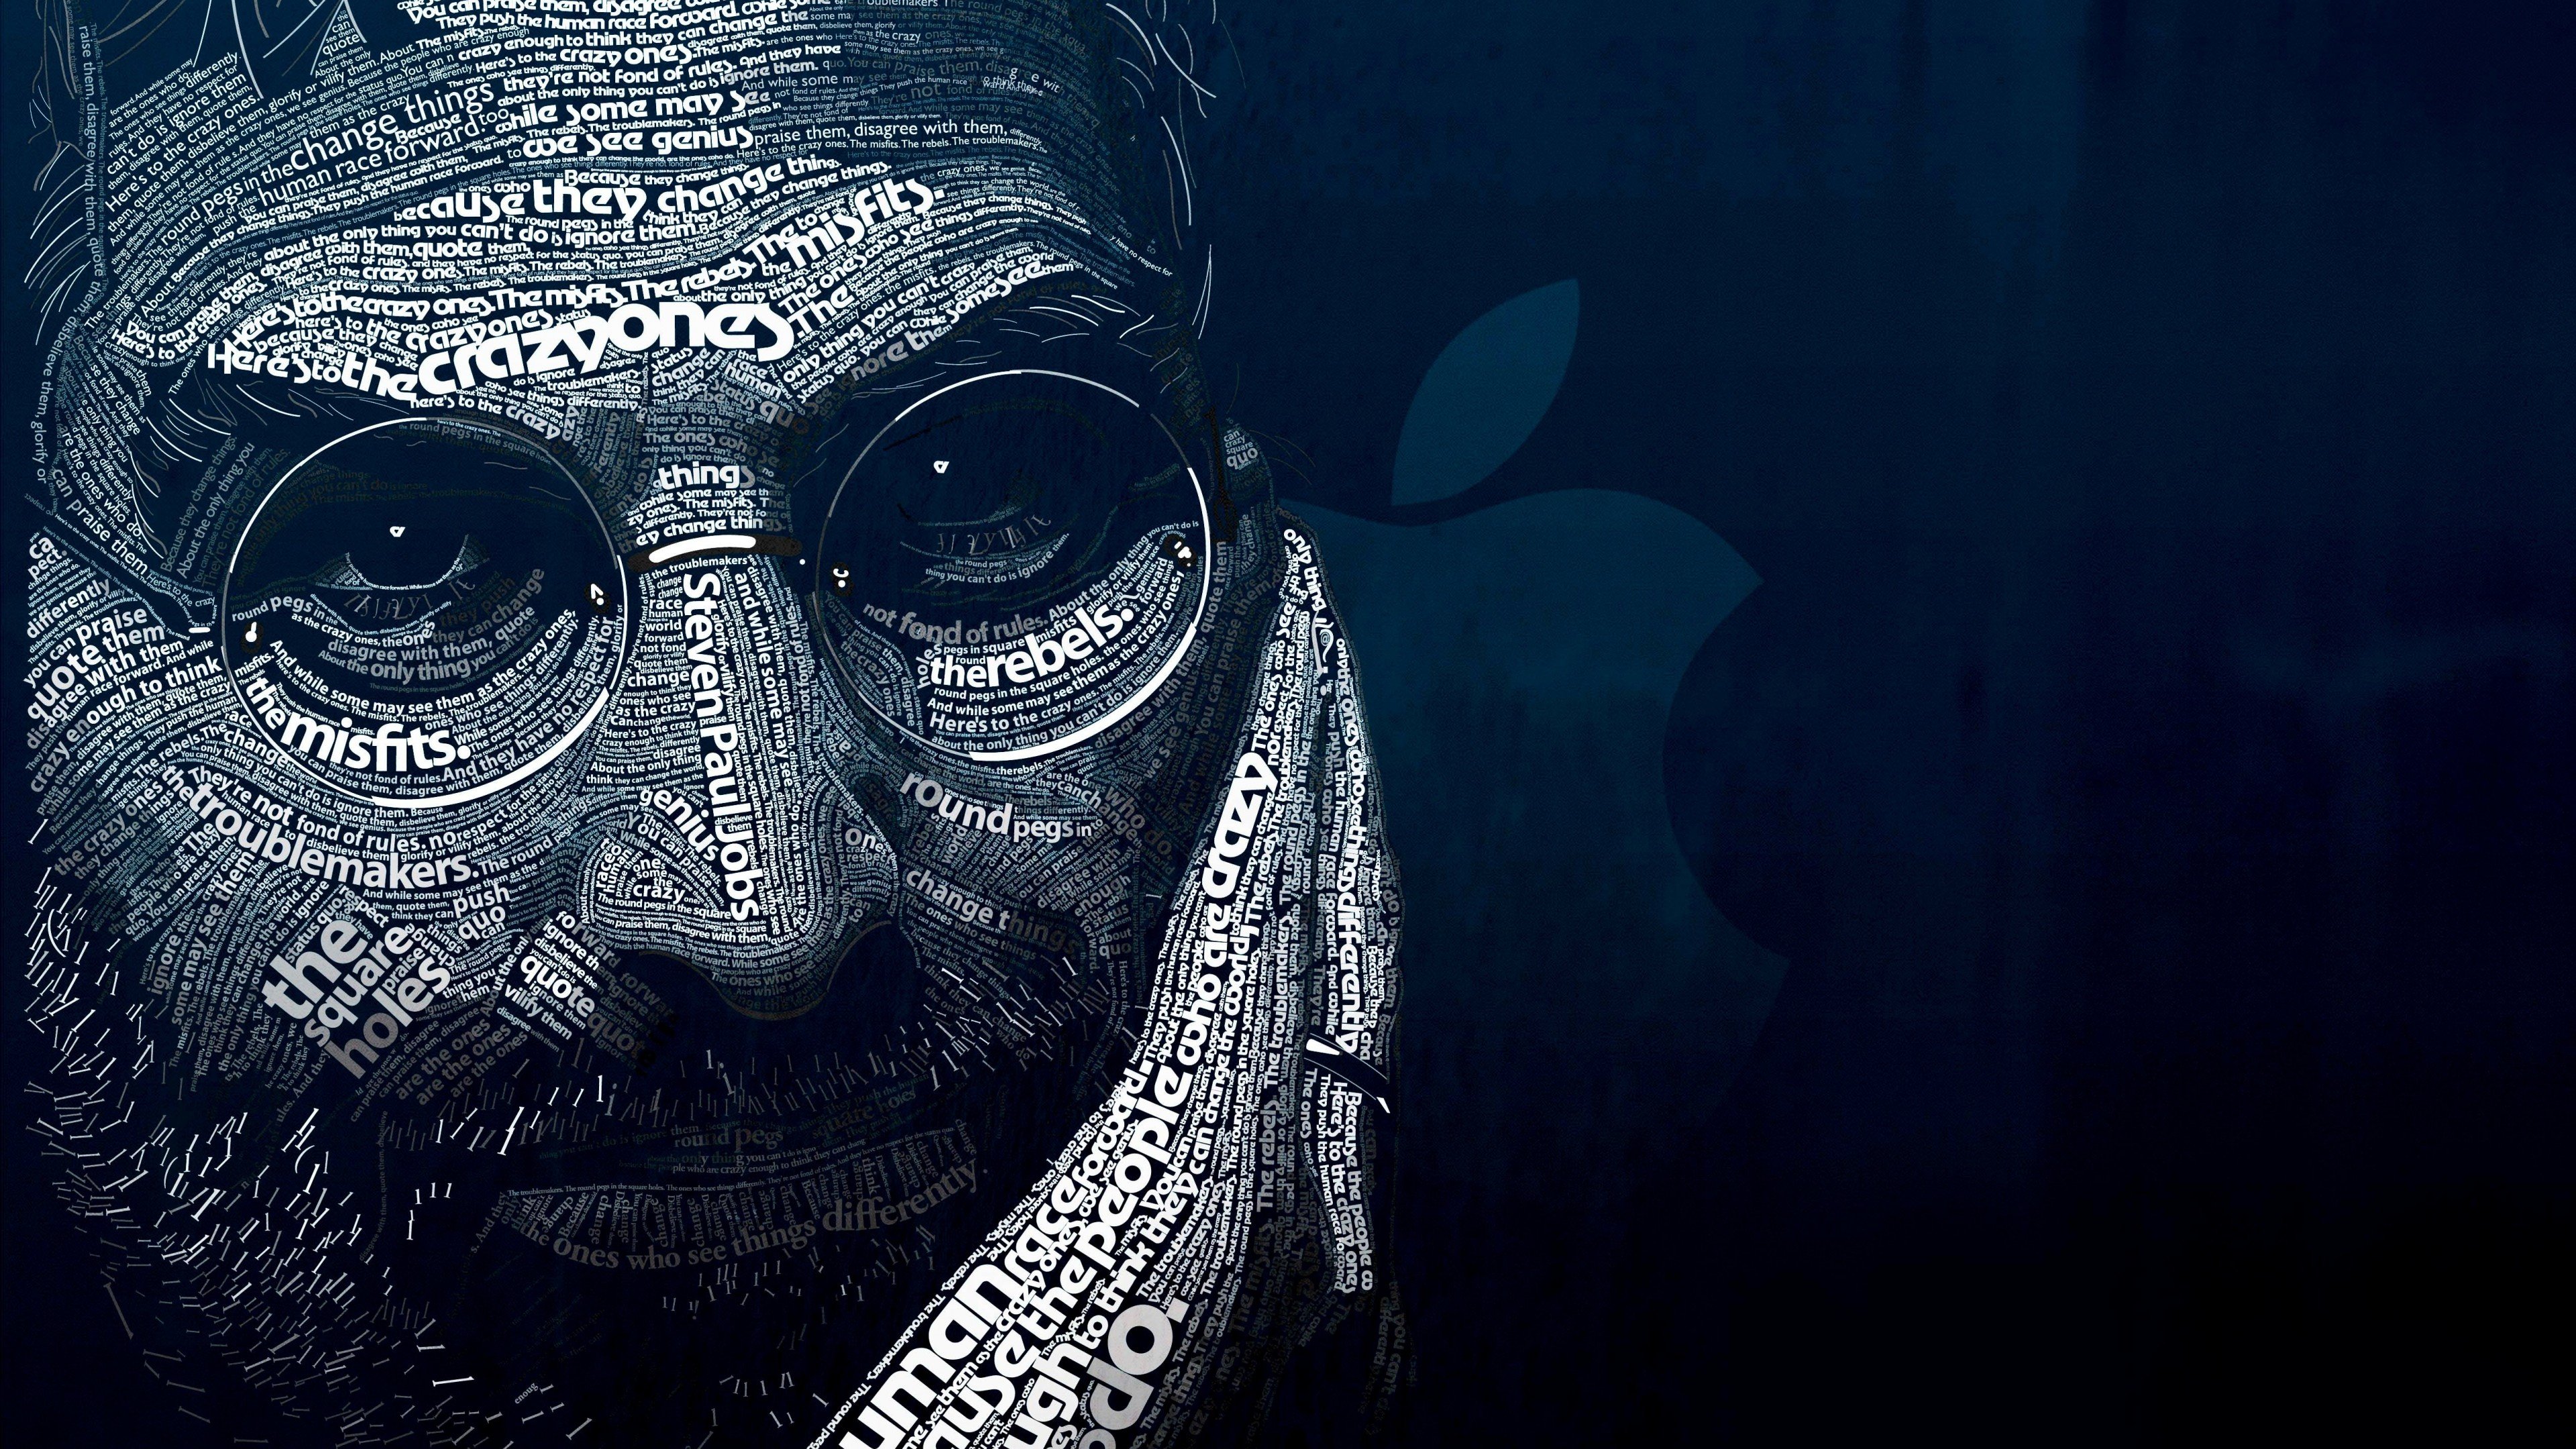 Steve Jobs Typographic Portrait Wallpaper for Desktop 4K x